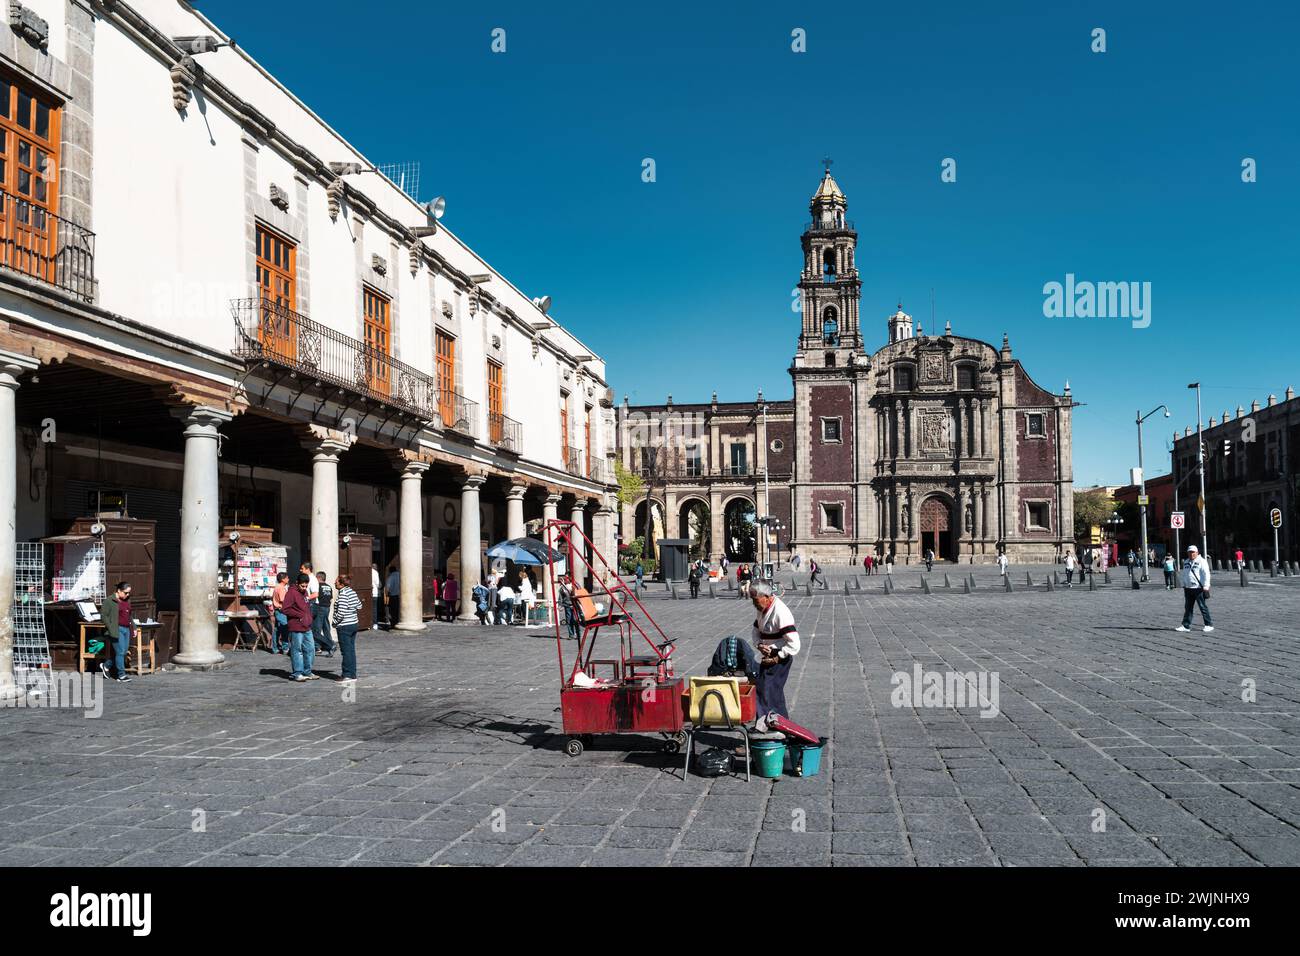 Santo Domingo plaza and Church in Old Town Mexico City, Mexico. Stock Photo